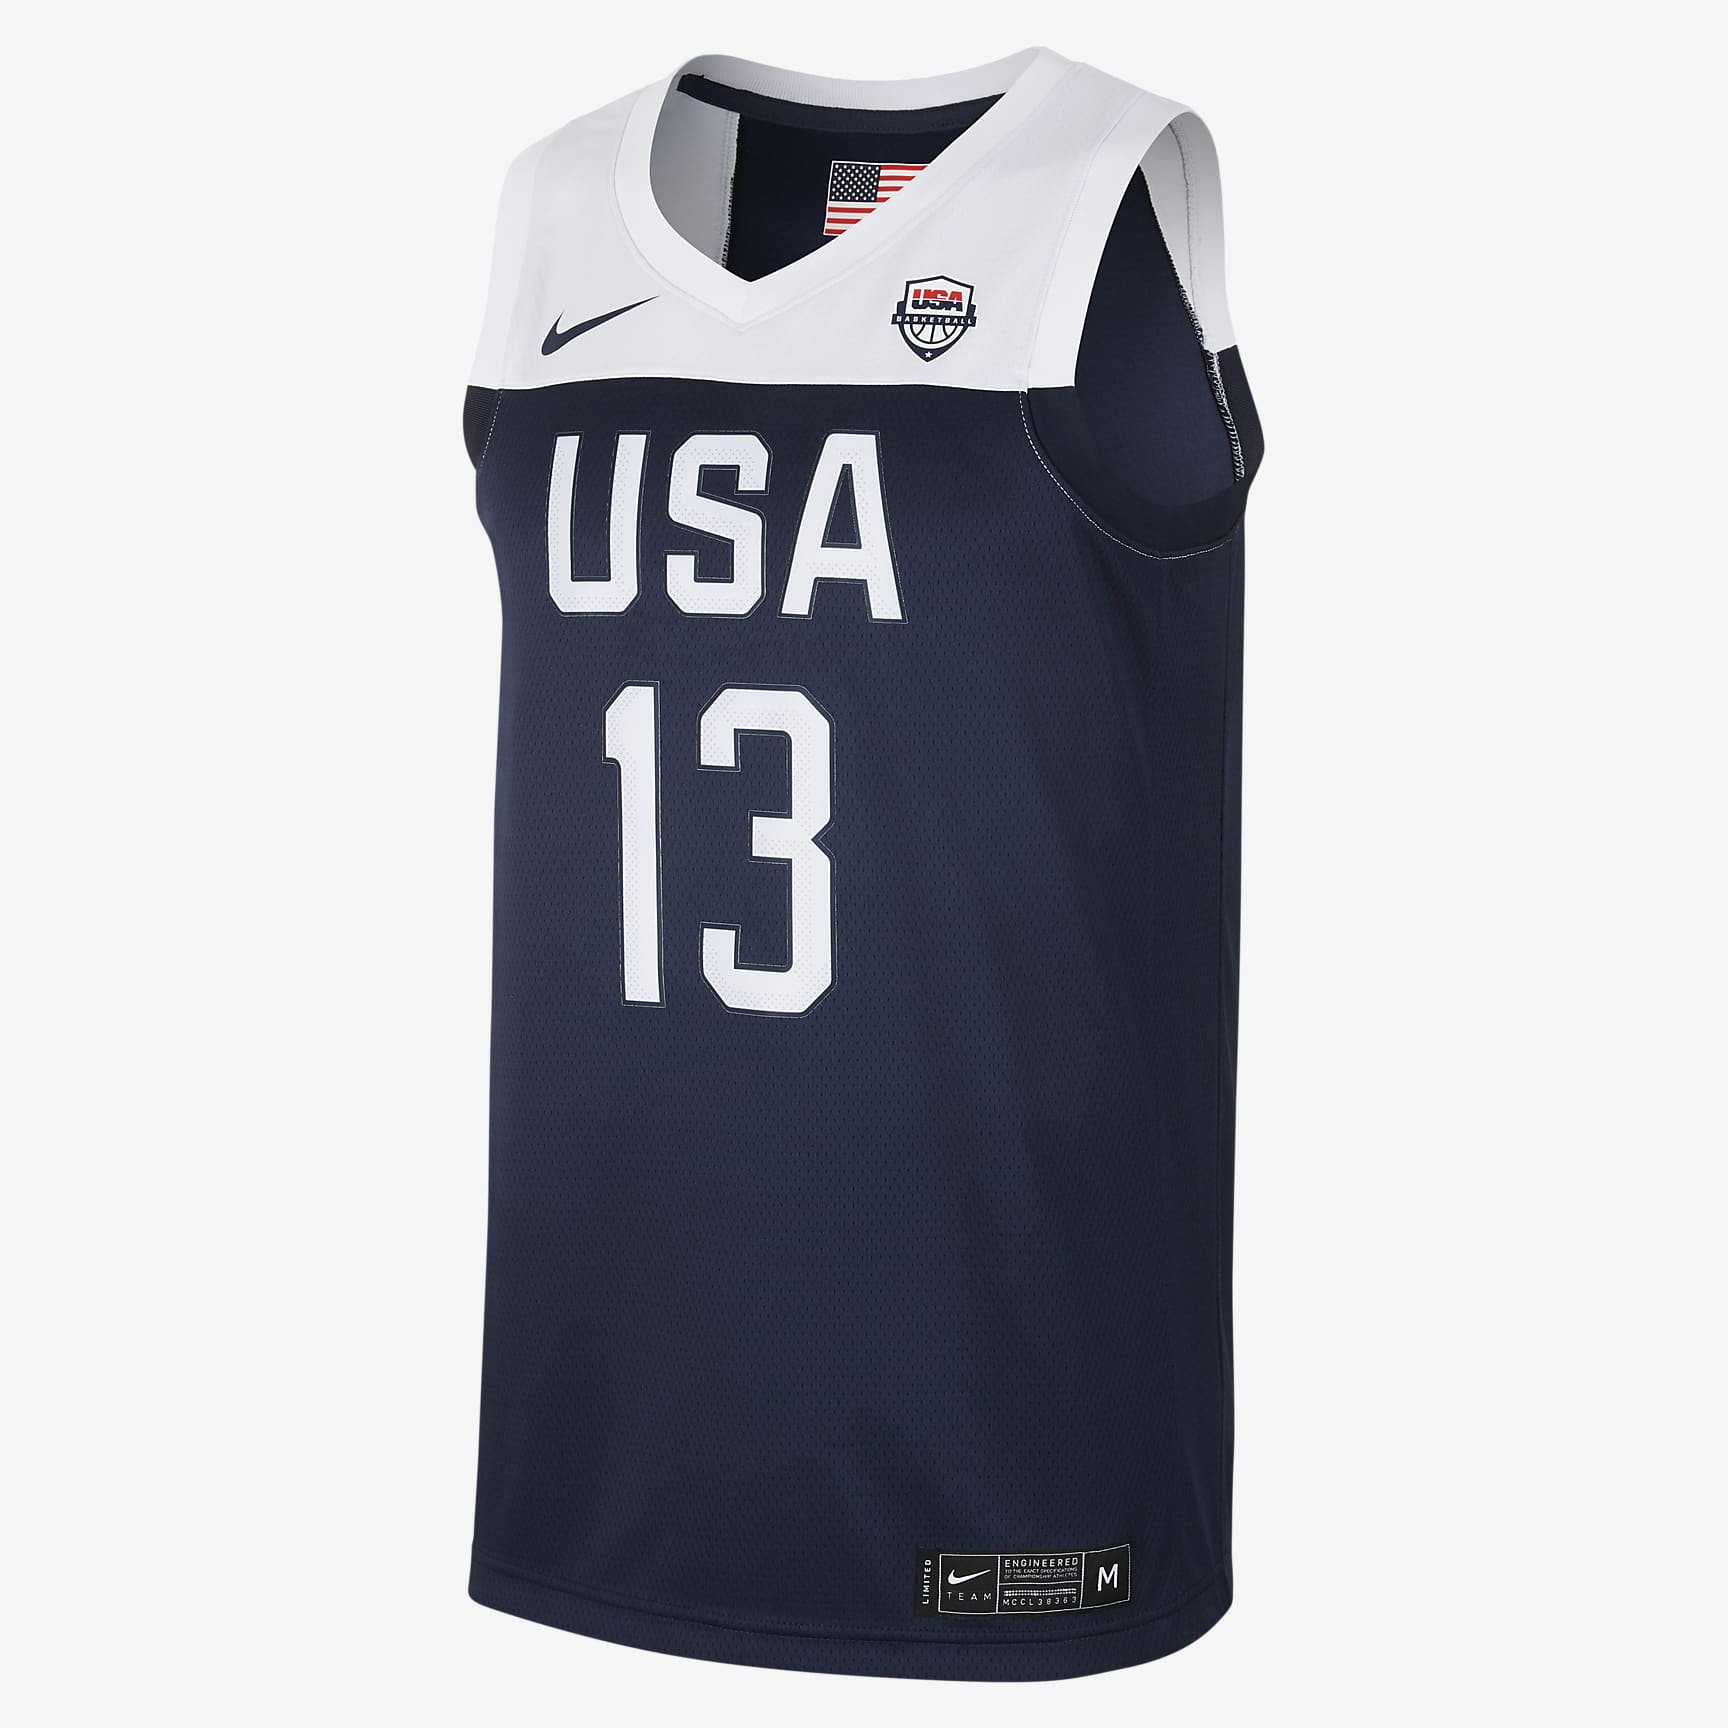 USA Nike (Road) Men's Basketball Jersey. Nike AU